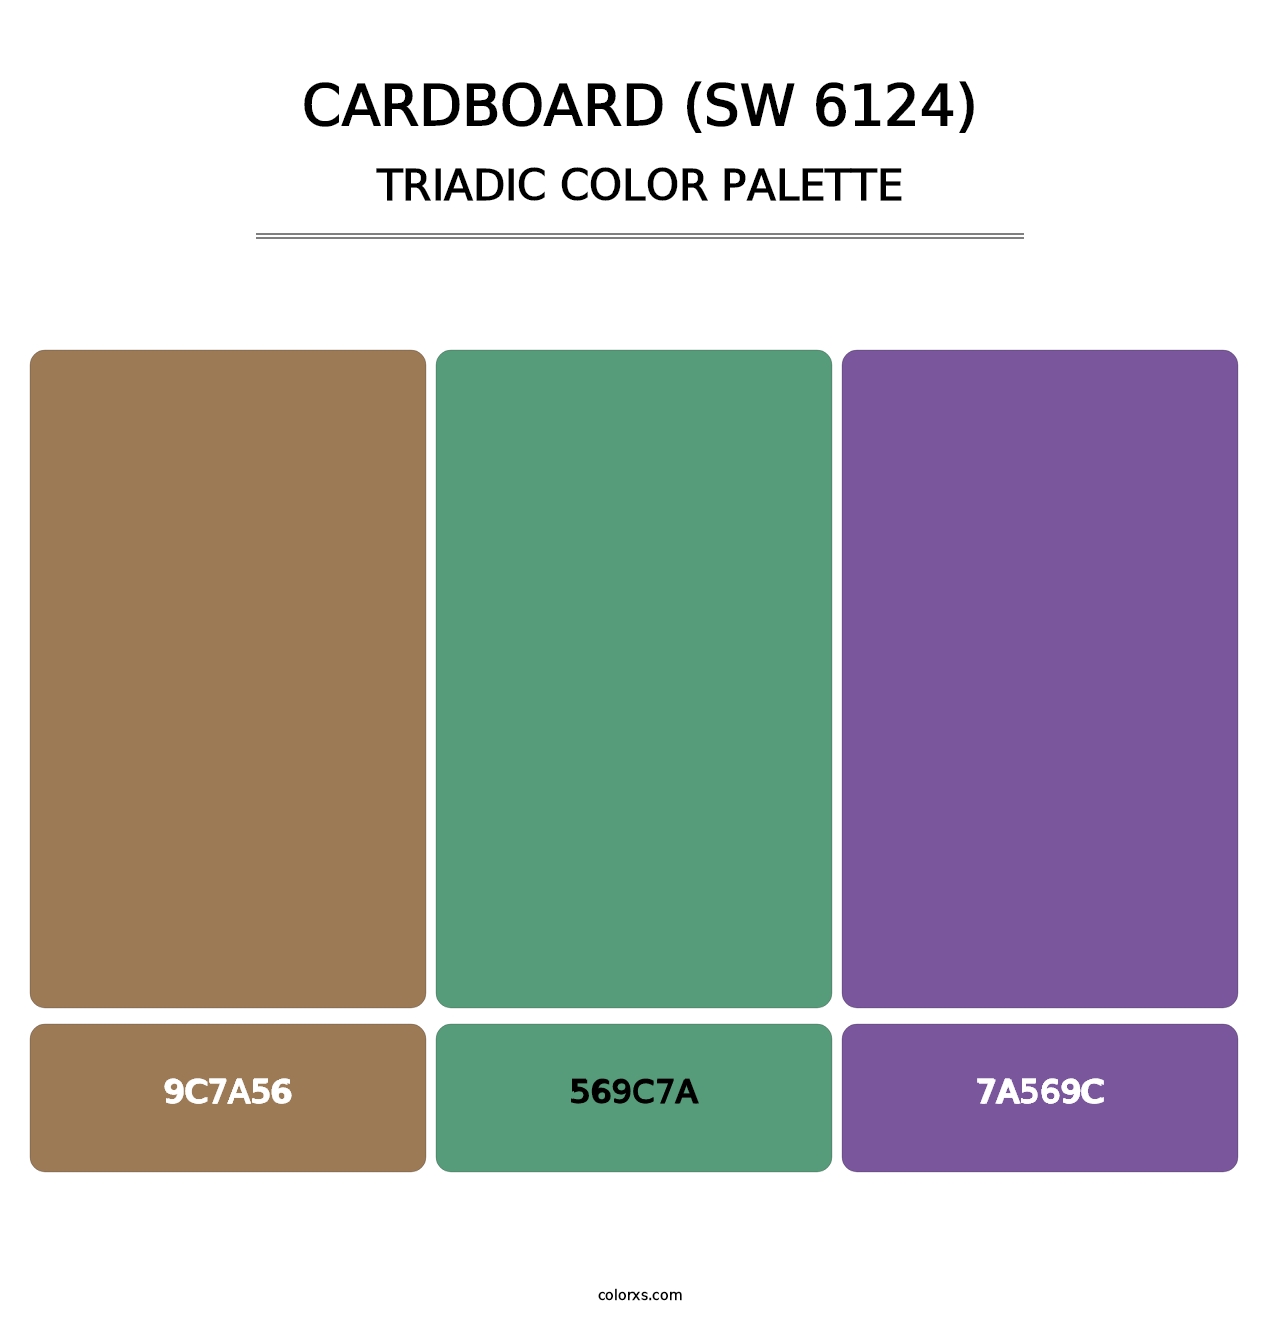 Cardboard (SW 6124) - Triadic Color Palette